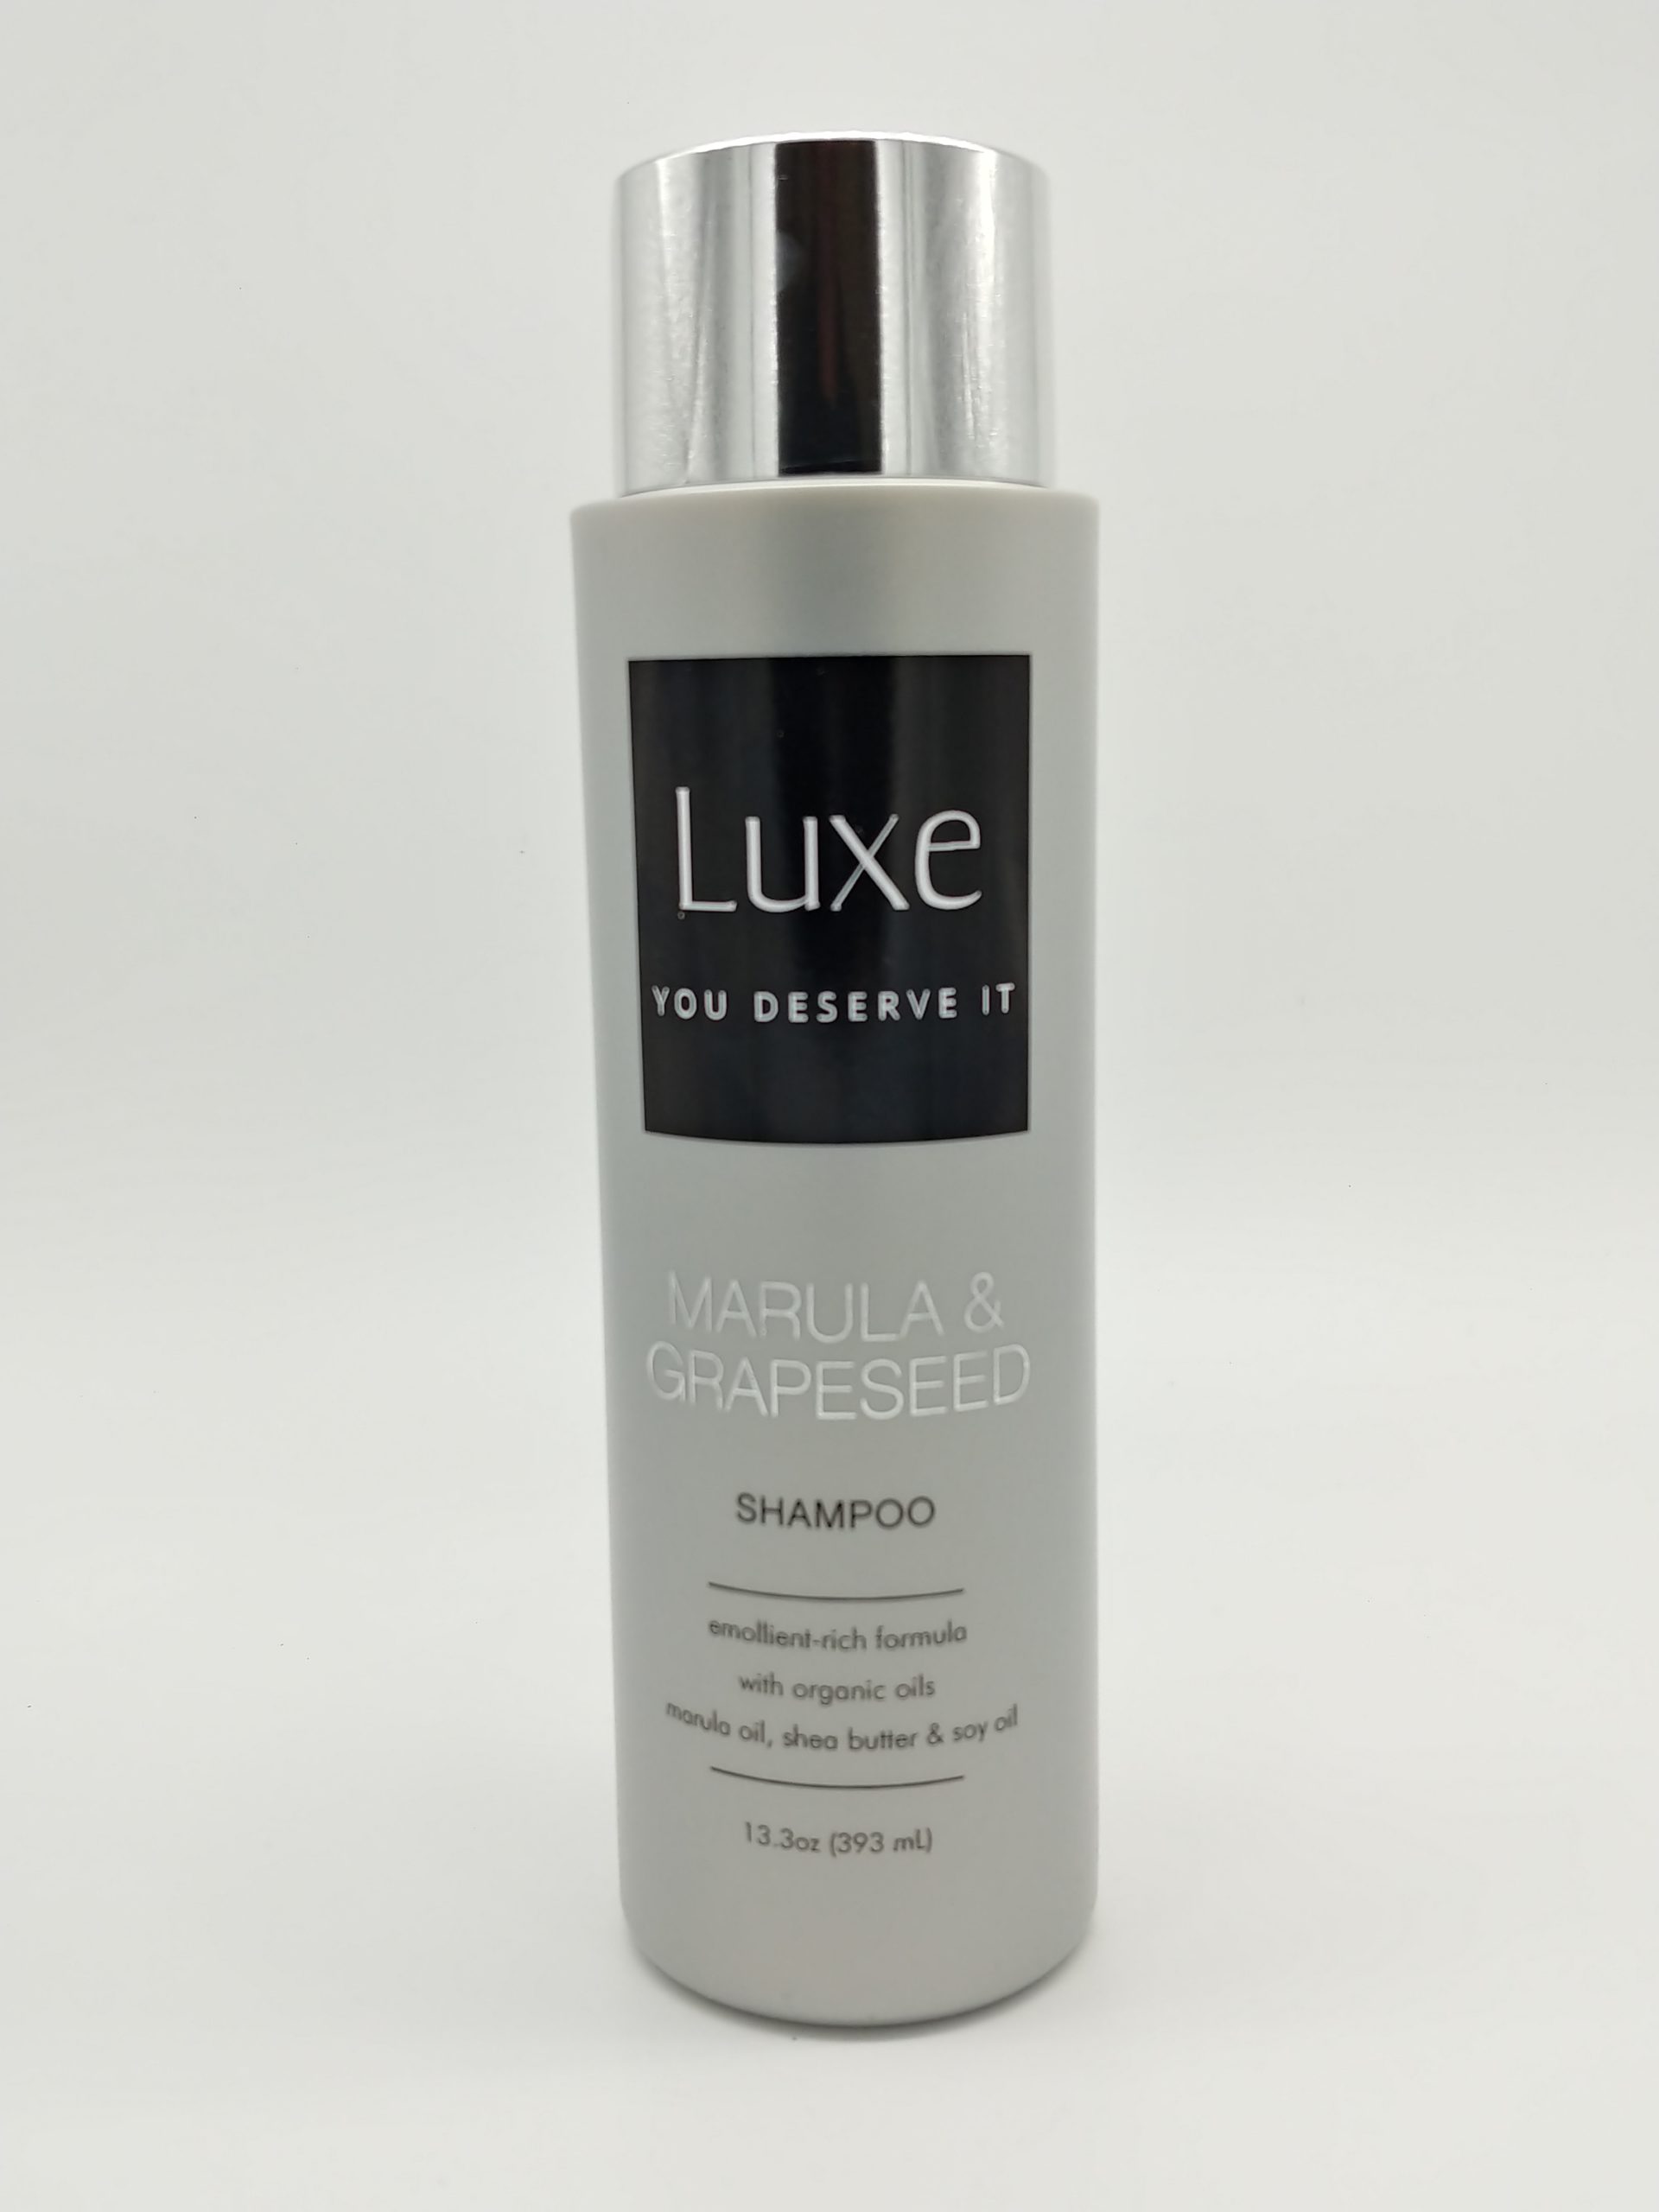 Luxe Marula & Grapeseed Shampoo